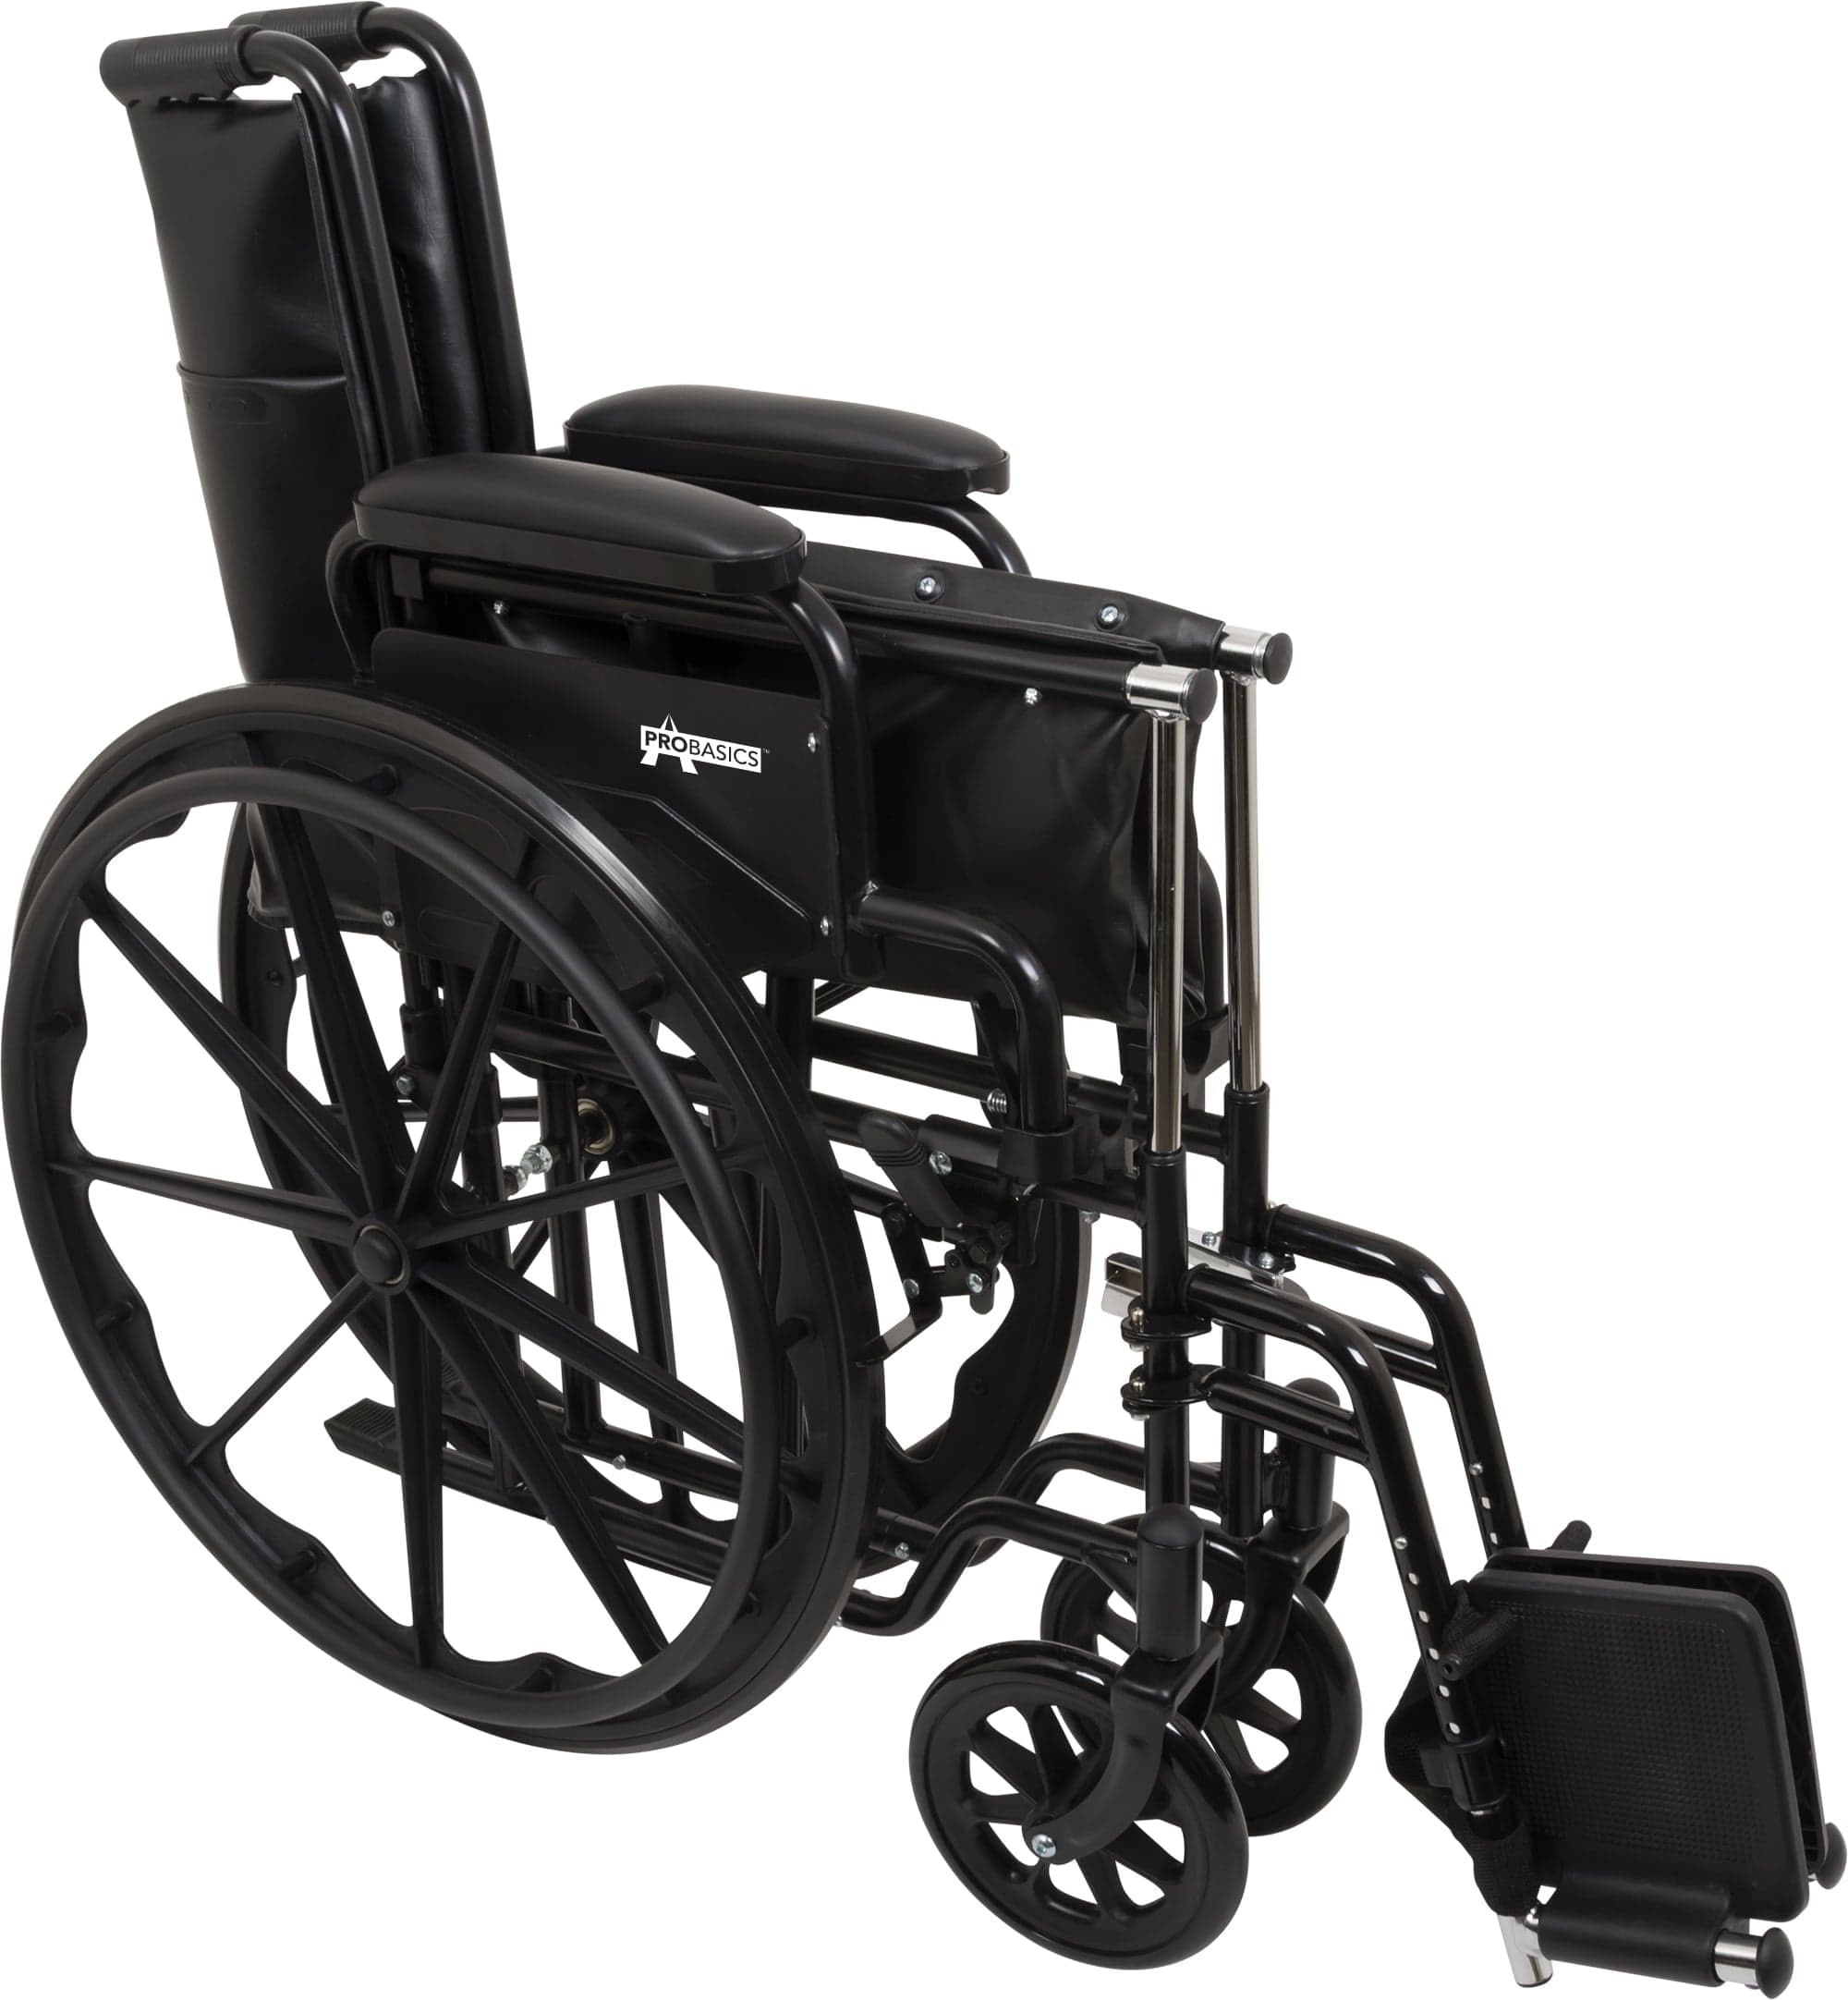 Compass Health K1 Wheelchairs Compass Health ProBasics K1 Lightweight Wheelchair with 16" x 16" Seat